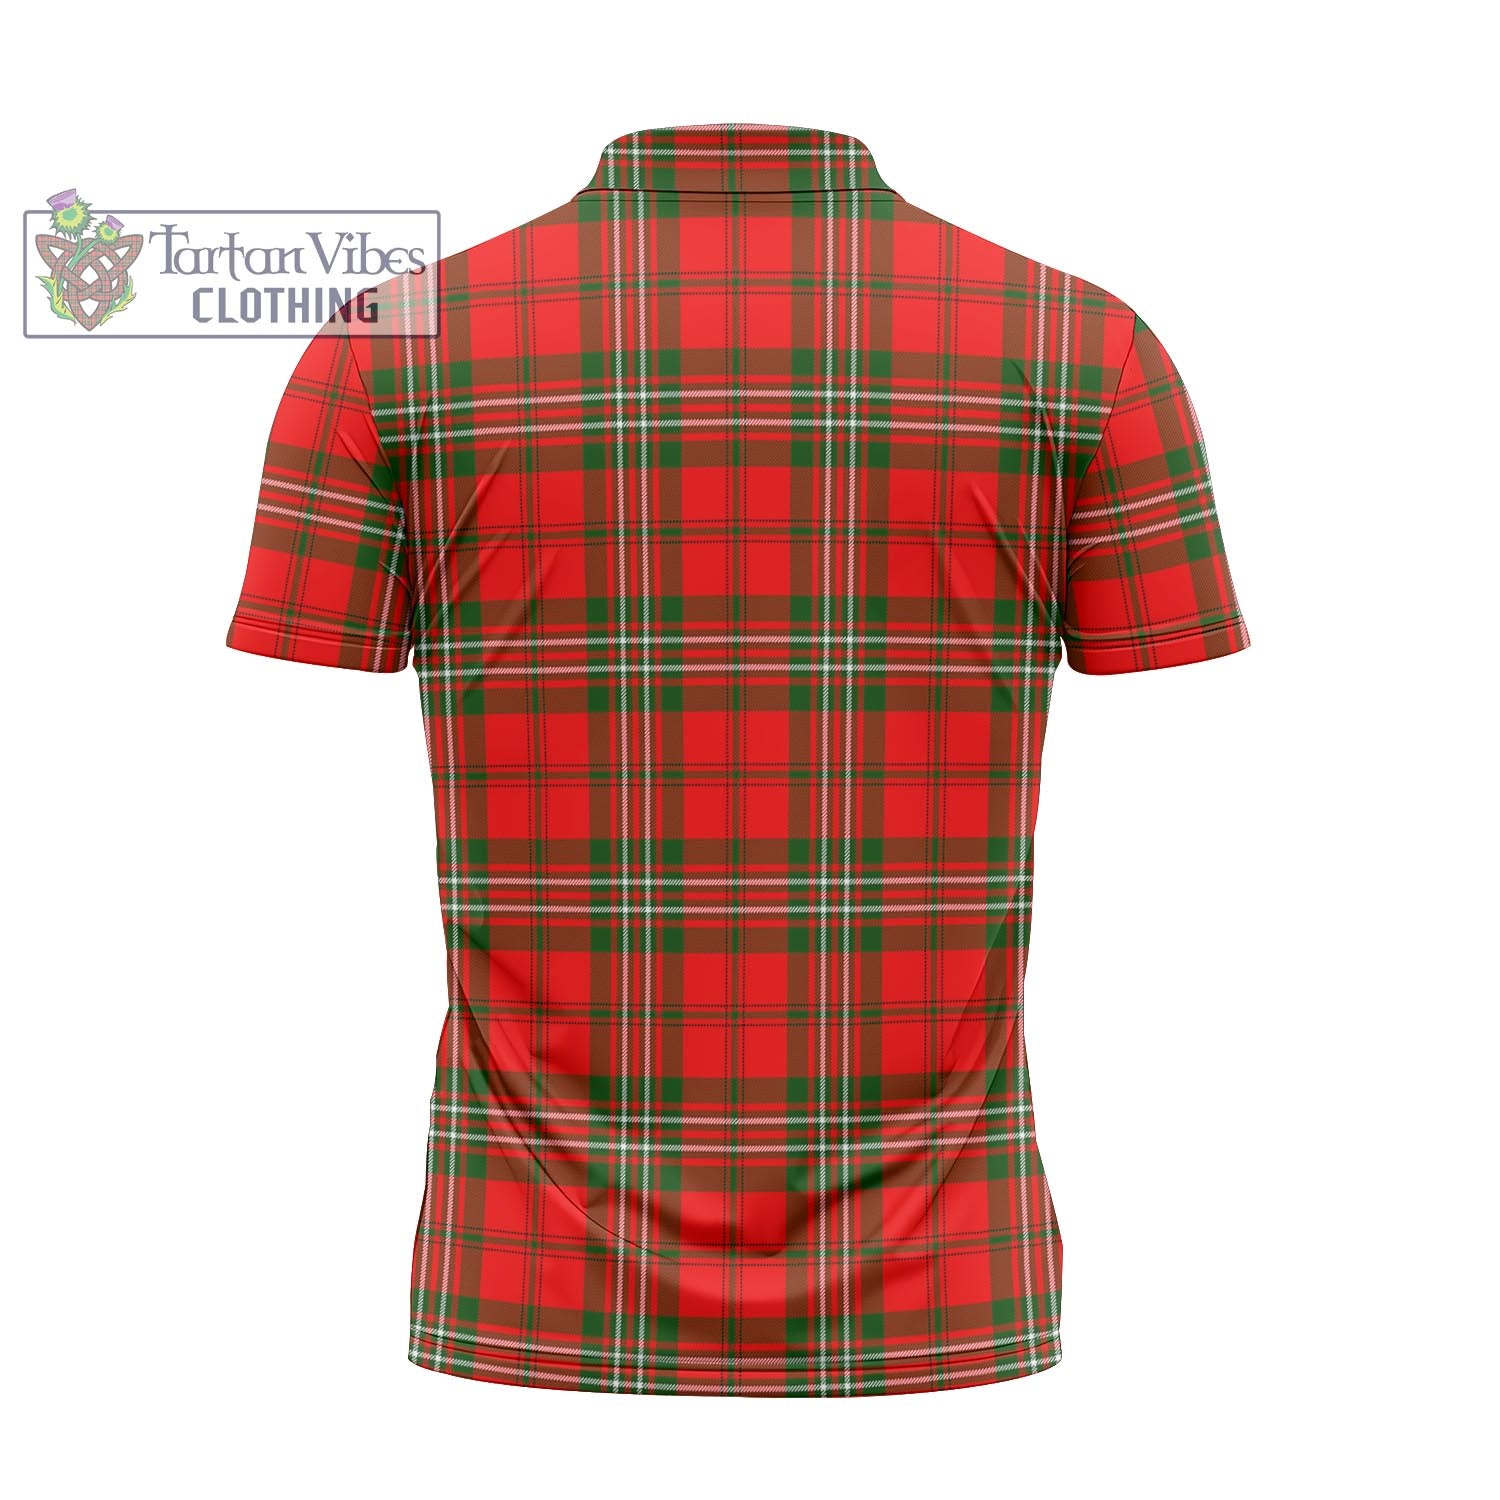 Tartan Vibes Clothing Langlands Tartan Zipper Polo Shirt with Family Crest